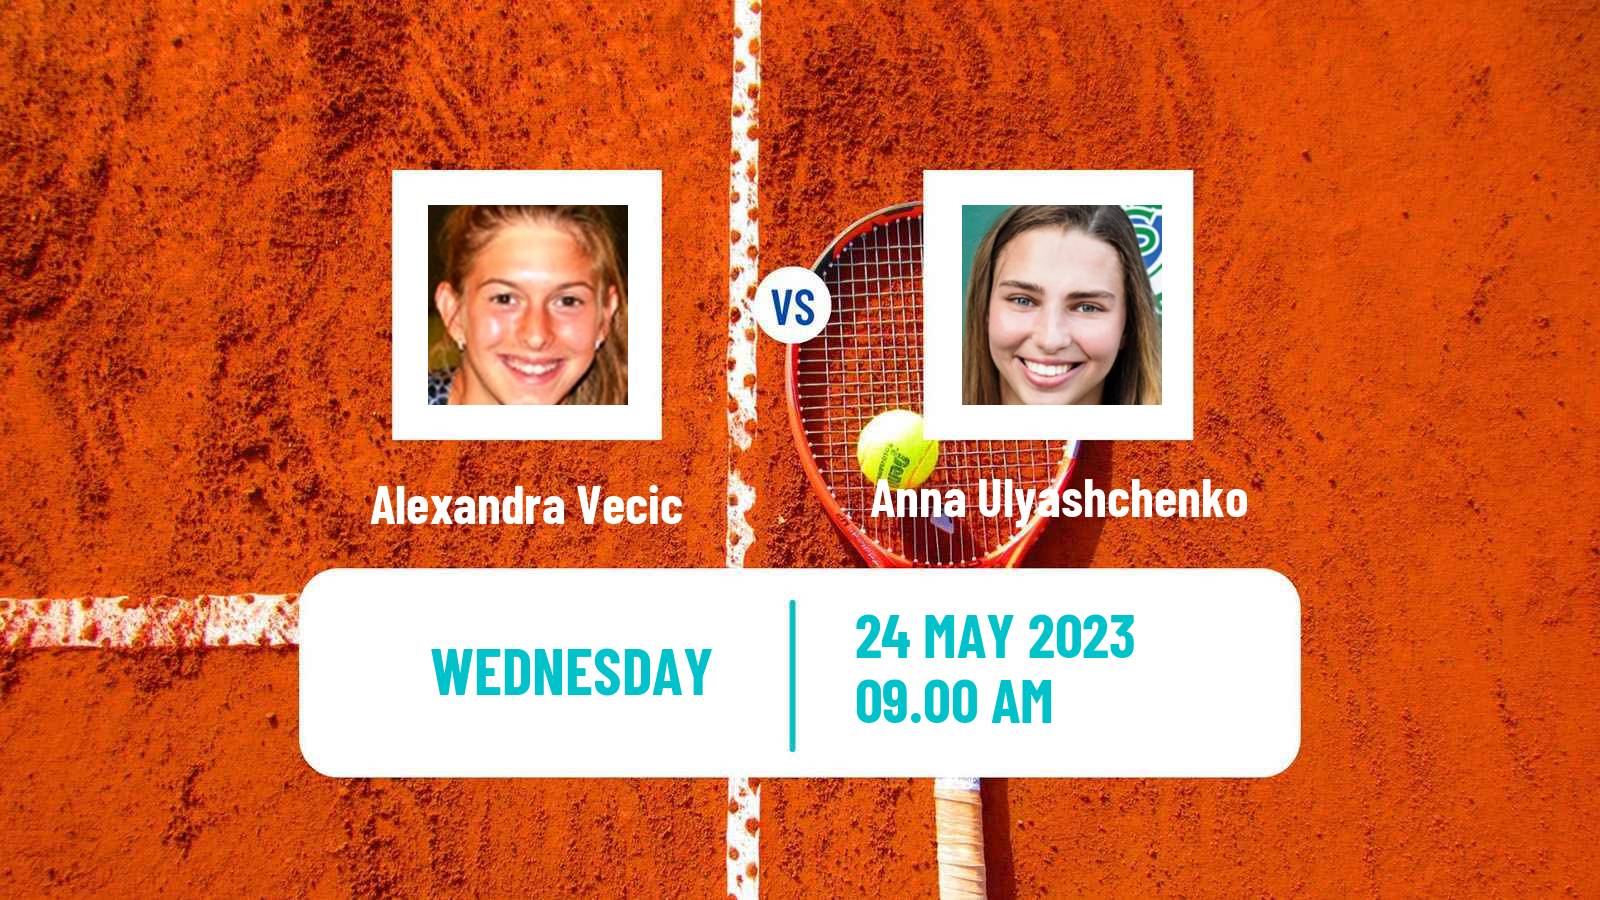 Tennis ITF W25 Monastir 3 Women Alexandra Vecic - Anna Ulyashchenko